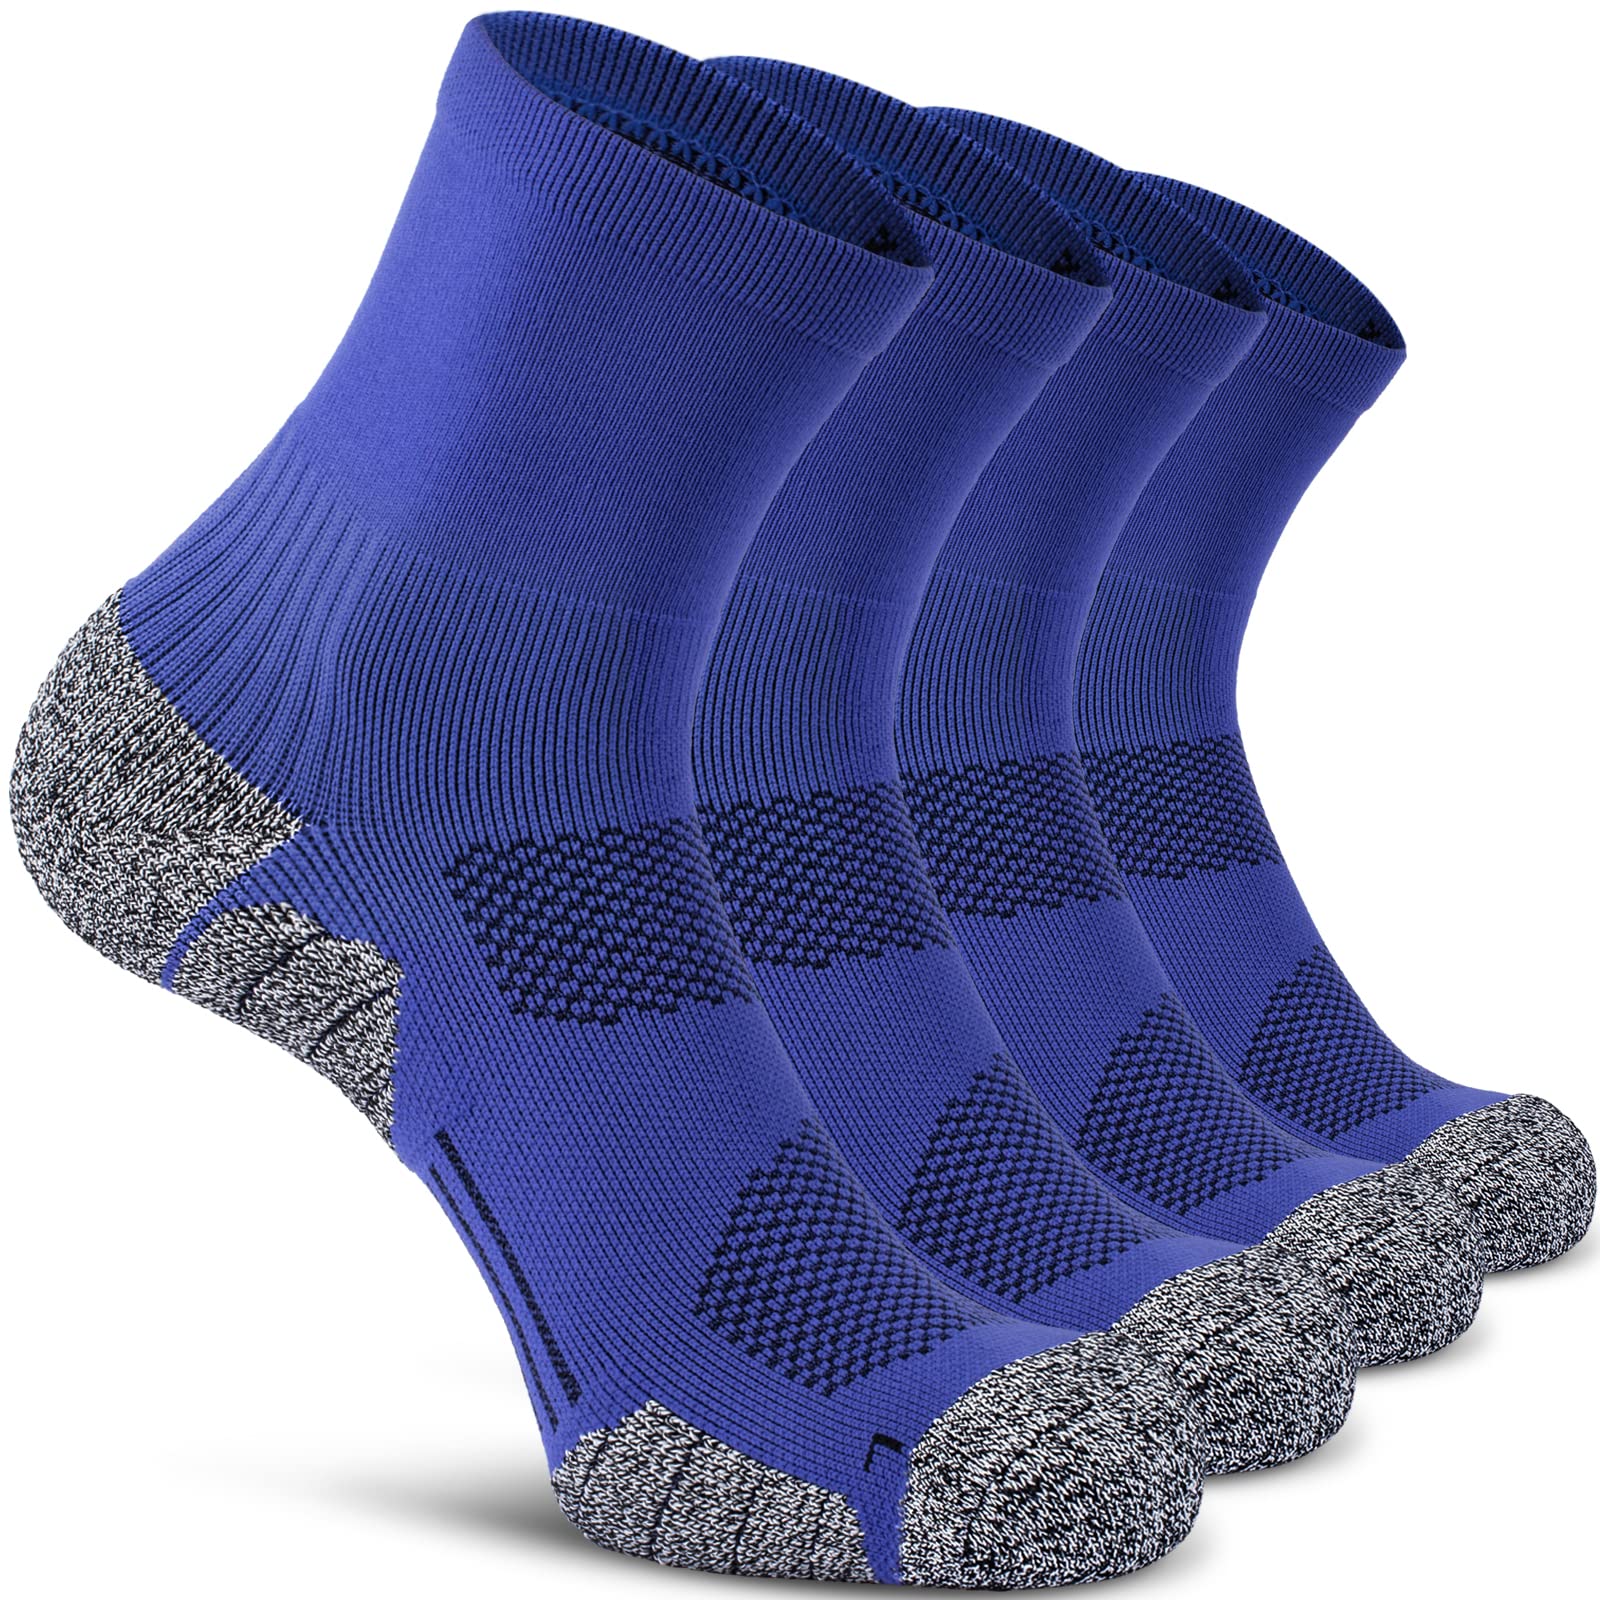 CWVLC Compression Athletic Quarter Socks Cushioned (4-Pair) for Men Women Kids